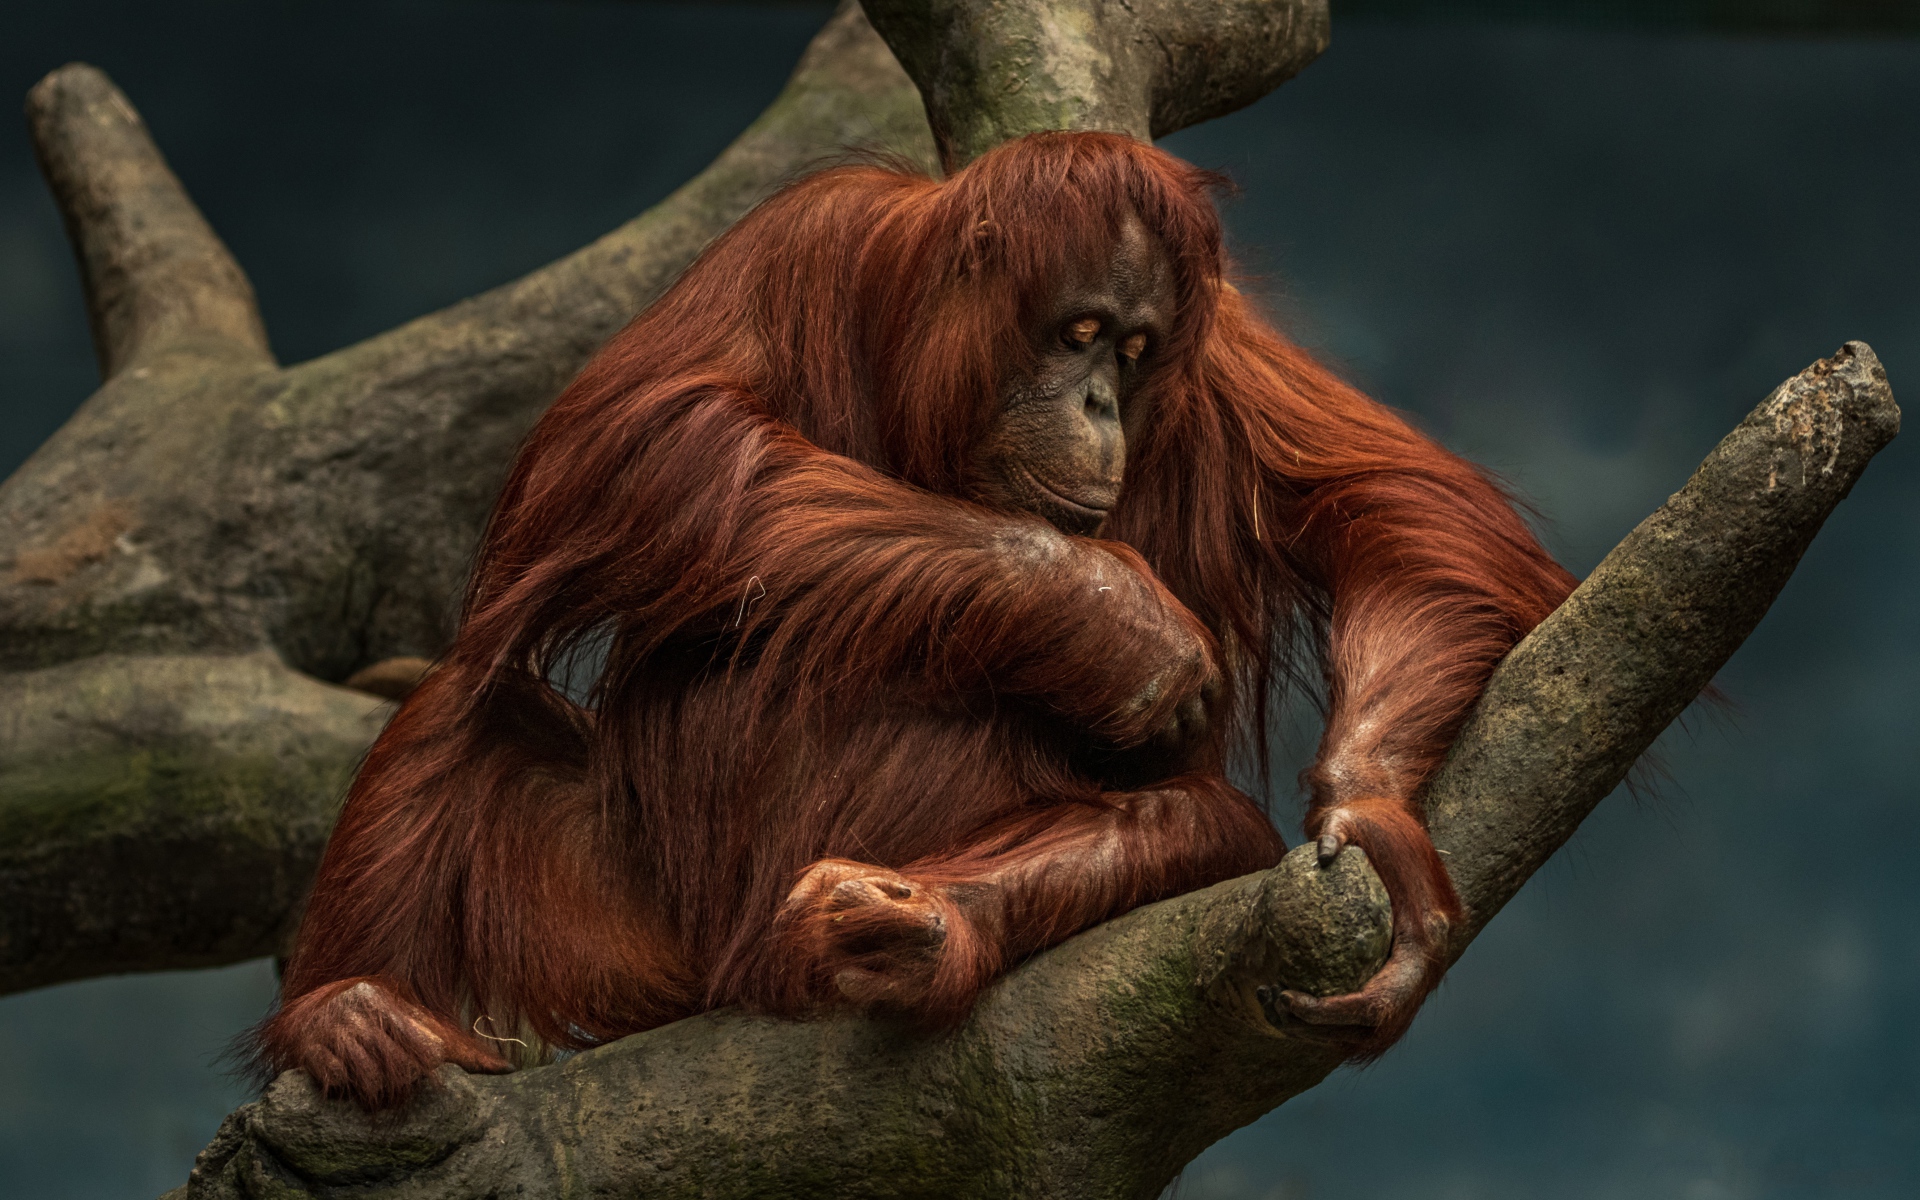 Wallpaper forest branches foliage jungle monkey orangutan images for  desktop section животные  download